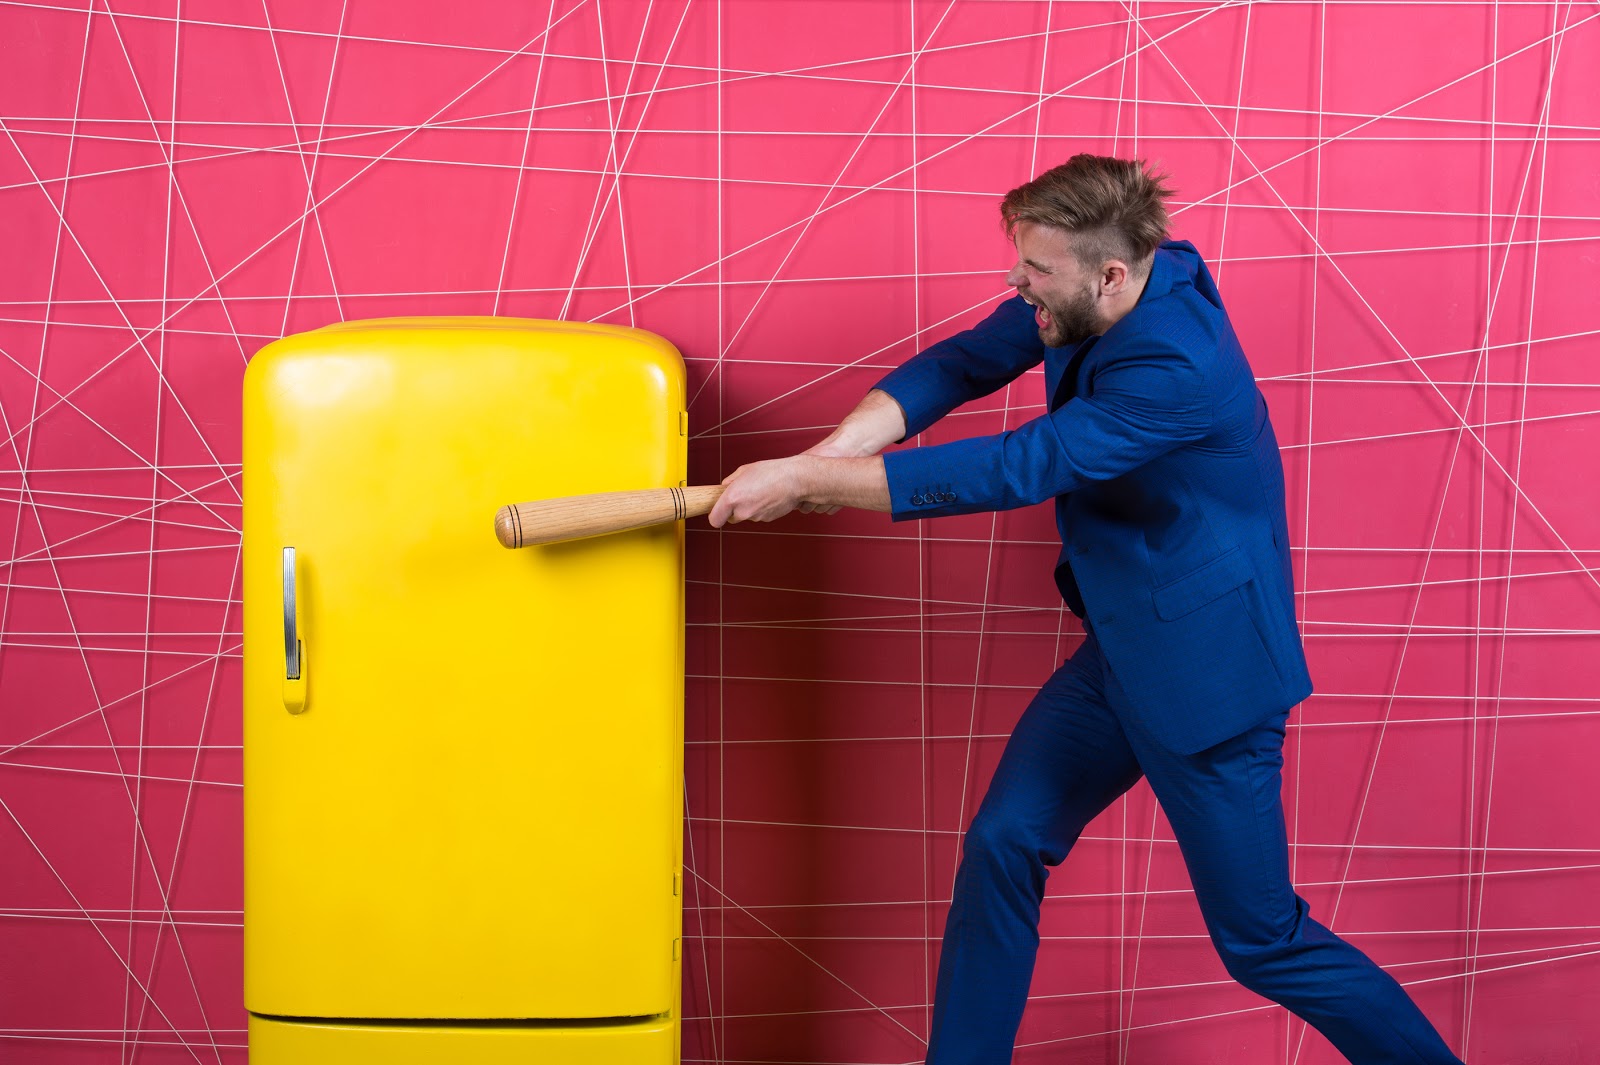 yellow-refrigerator-with-man-hitting-it-with-a-baseball-bat